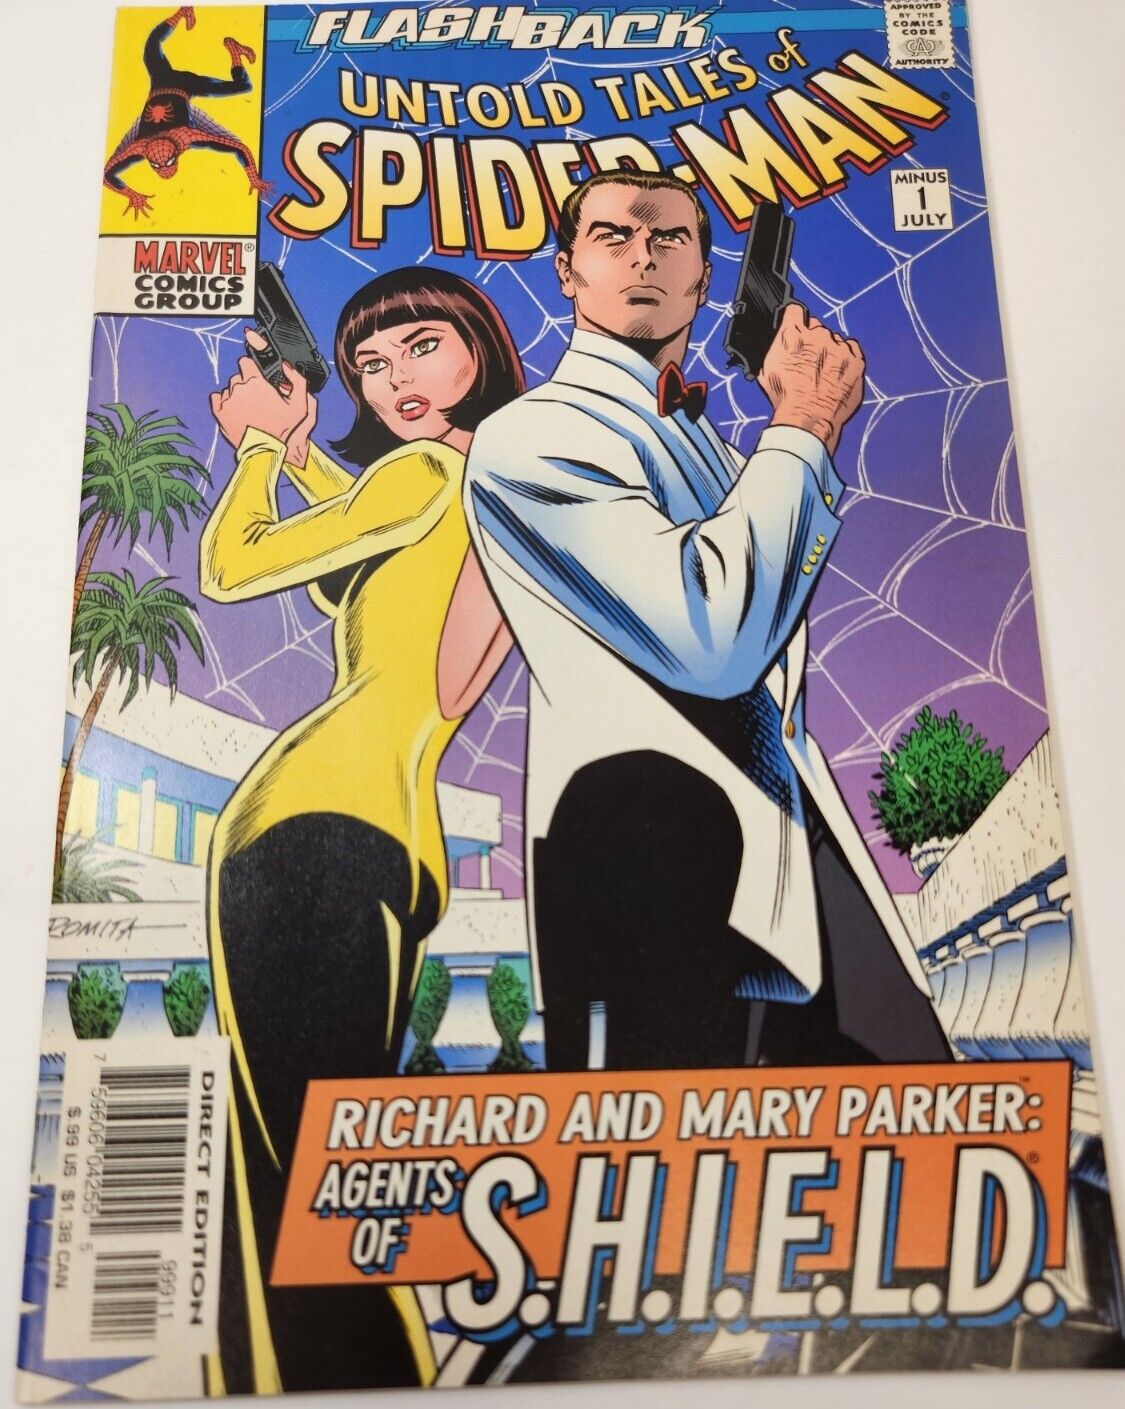 Untold Tales of Spider-Man, Agents of Shield #1 Marvel Comics, 1991 VTG90s, F/VF